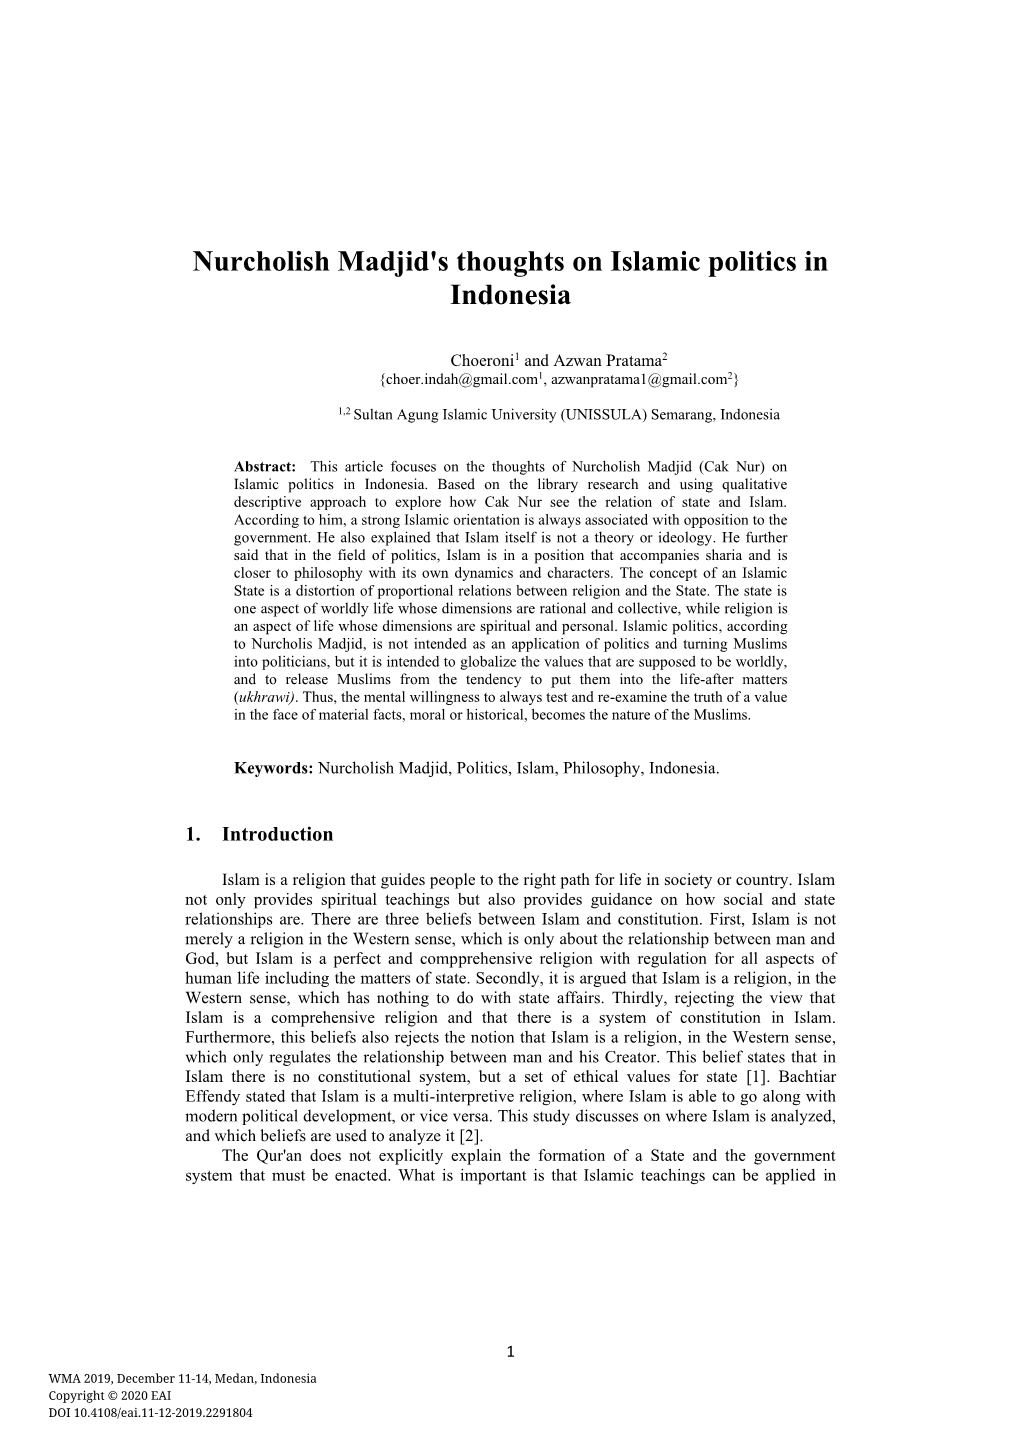 Nurcholish Madjid's Thoughts on Islamic Politics in Indonesia